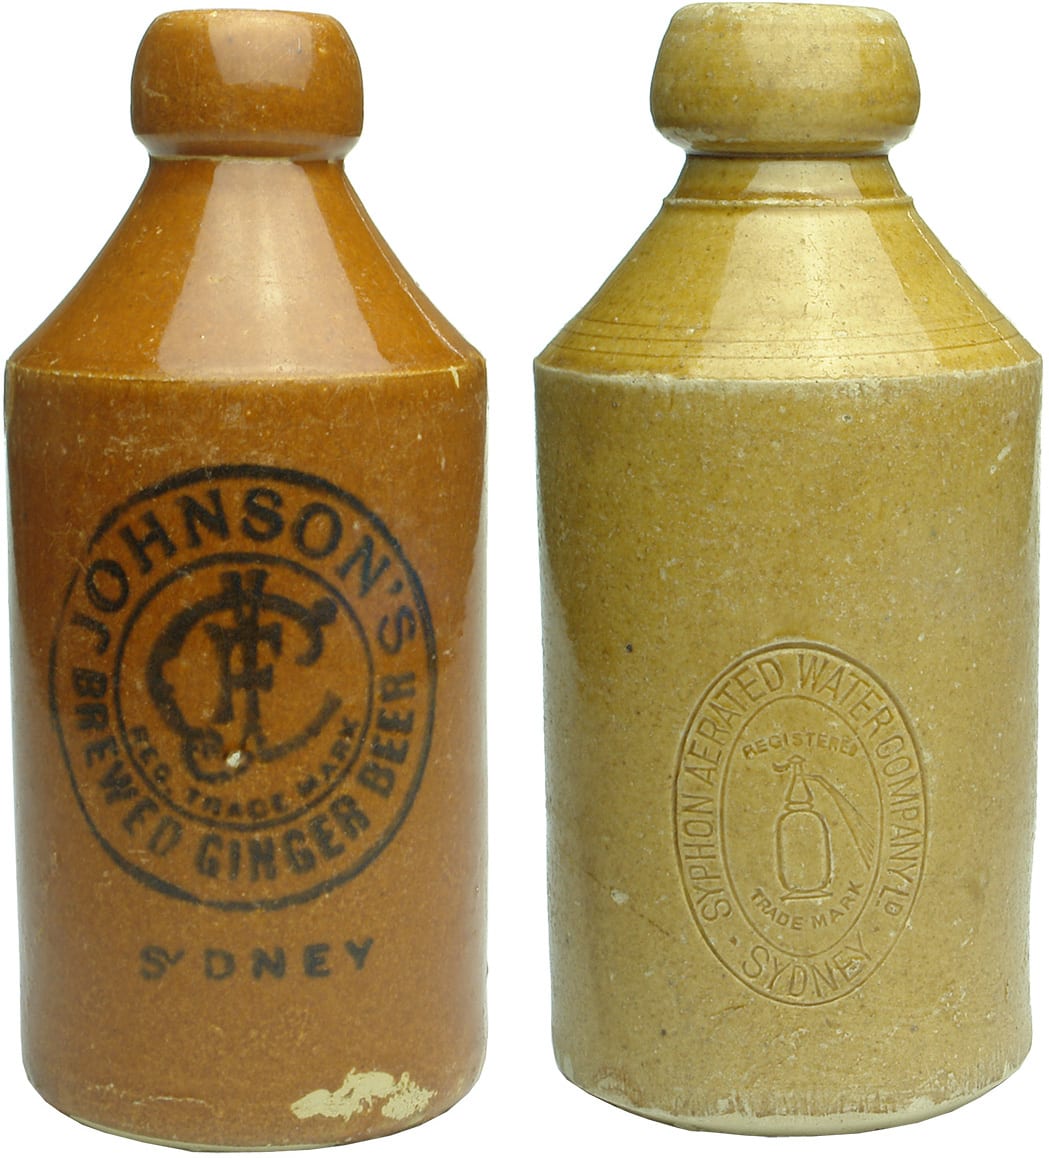 Johnson Syphon Sydney Stoneware Ginger Beer Bottles